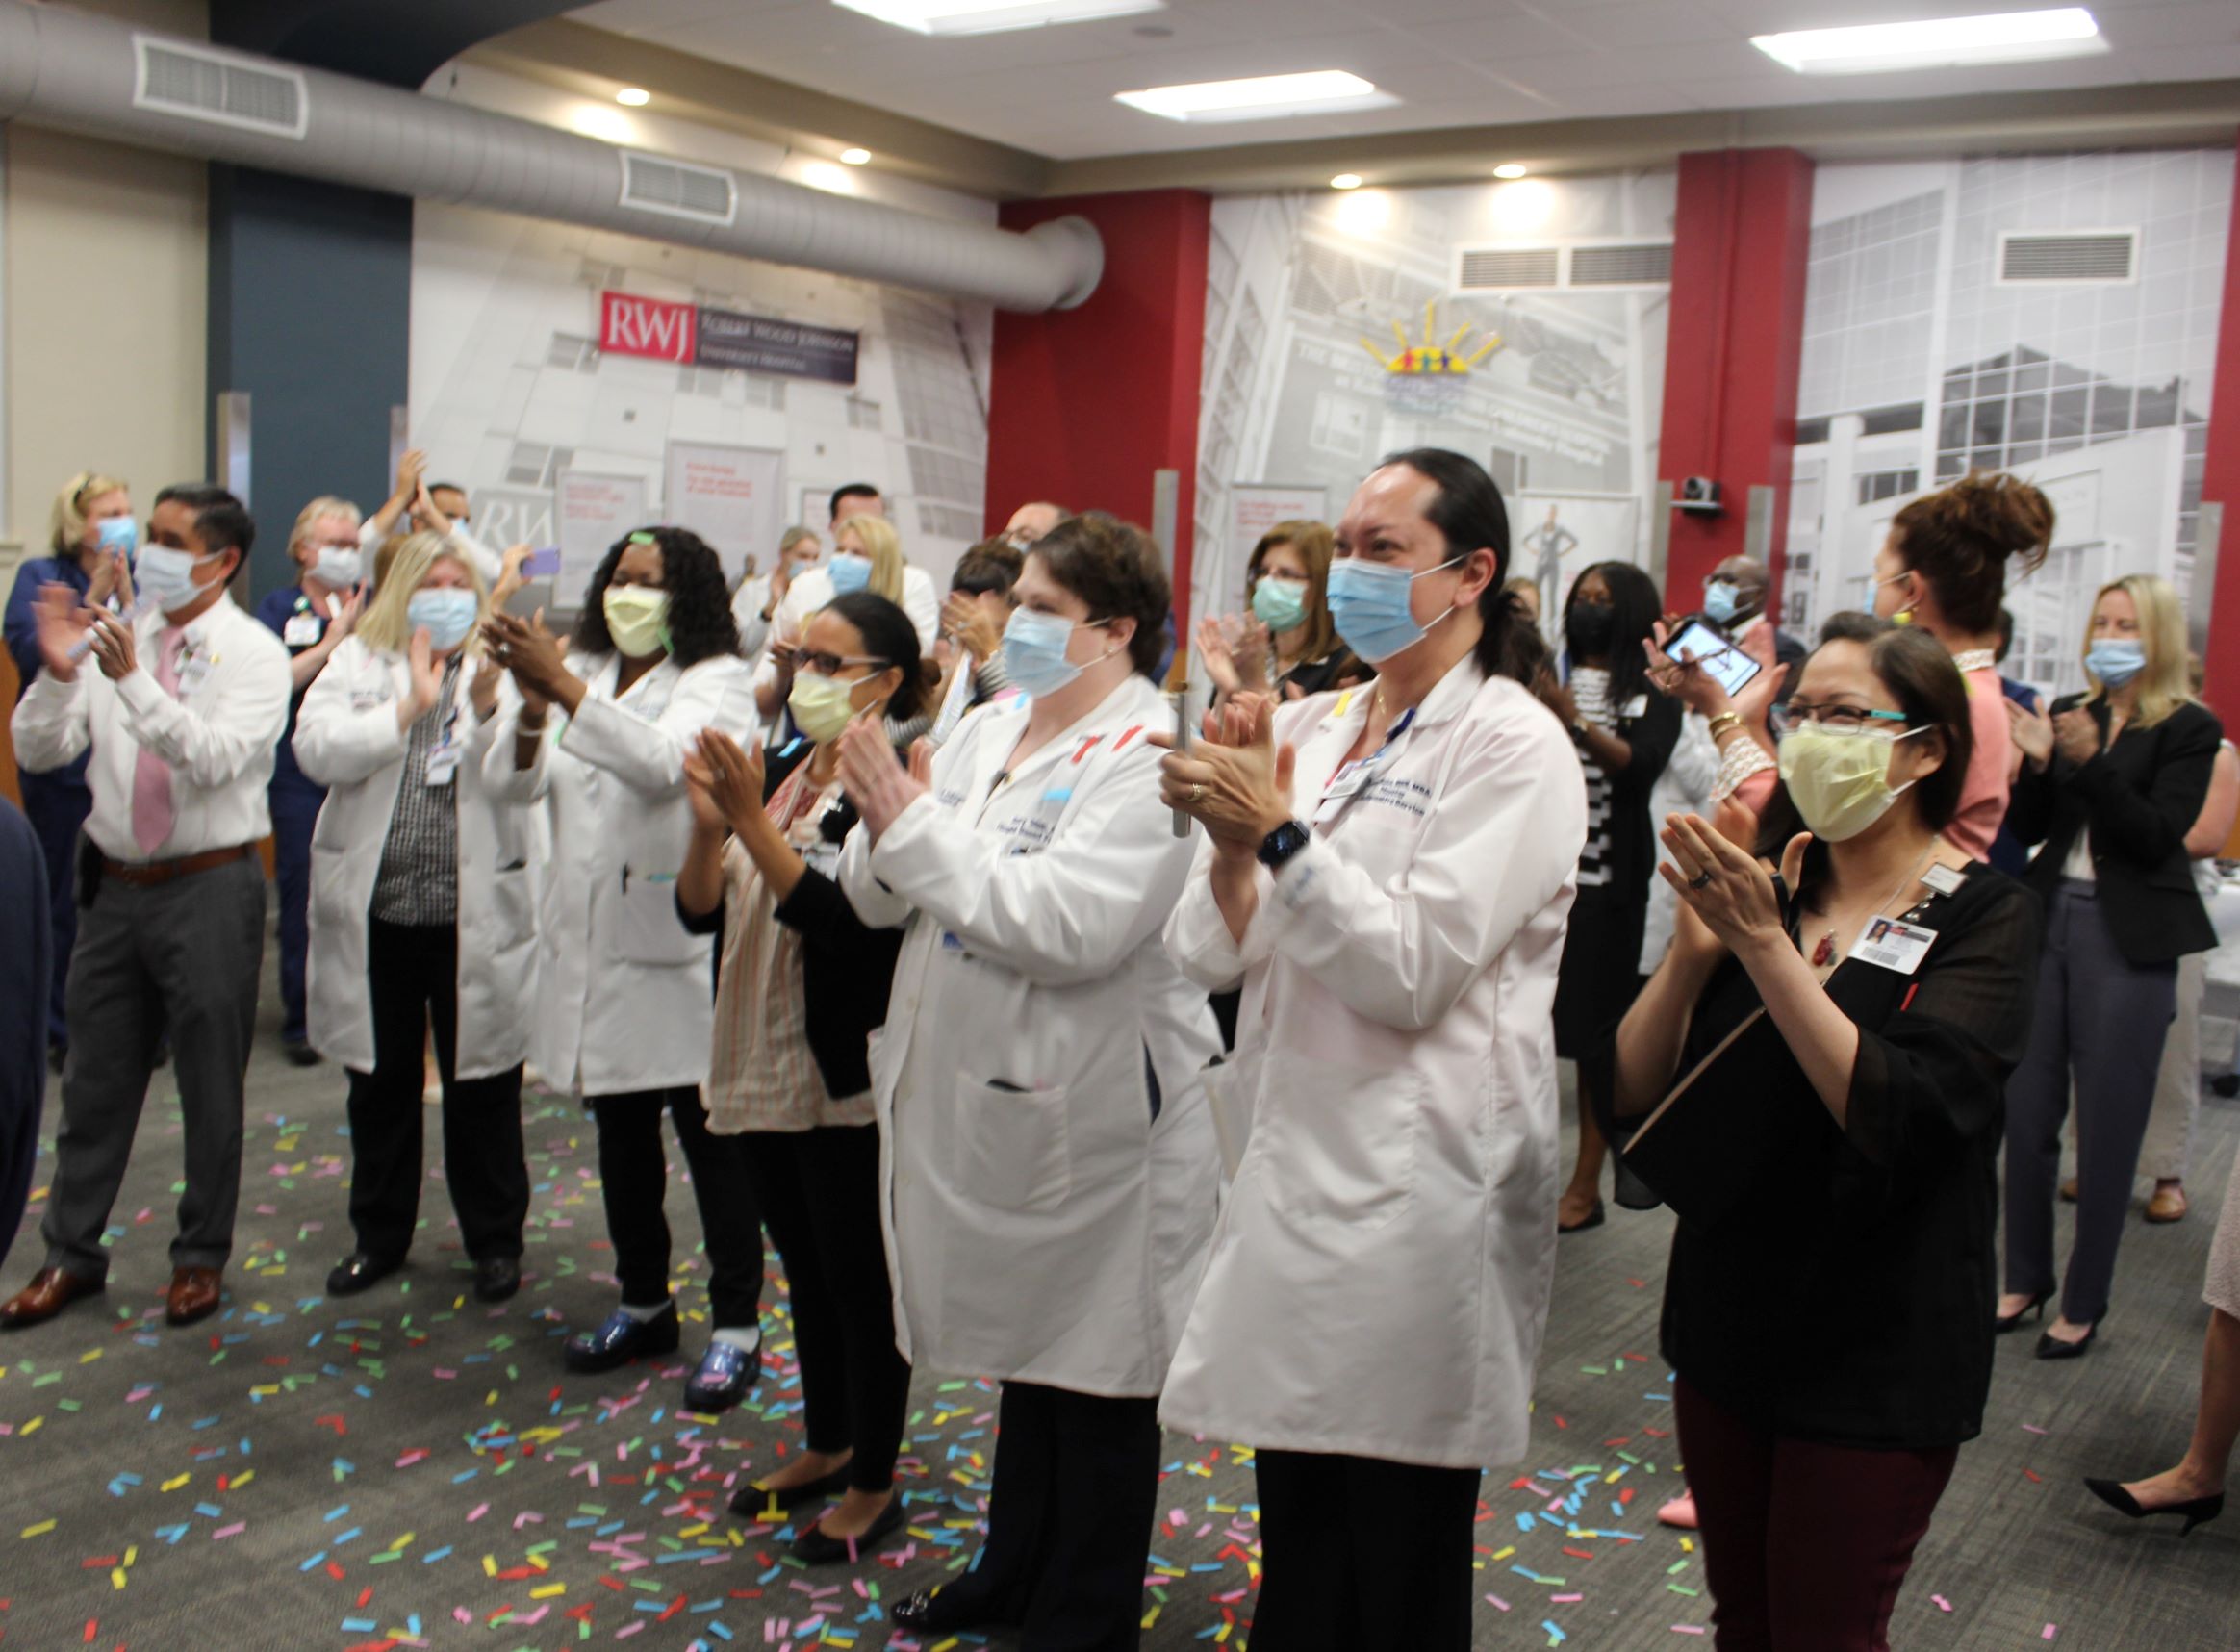 Nurses and staff clapping, celebrating RWJ University Hospital's Sixth Magnet Designation for Nursing Excellence